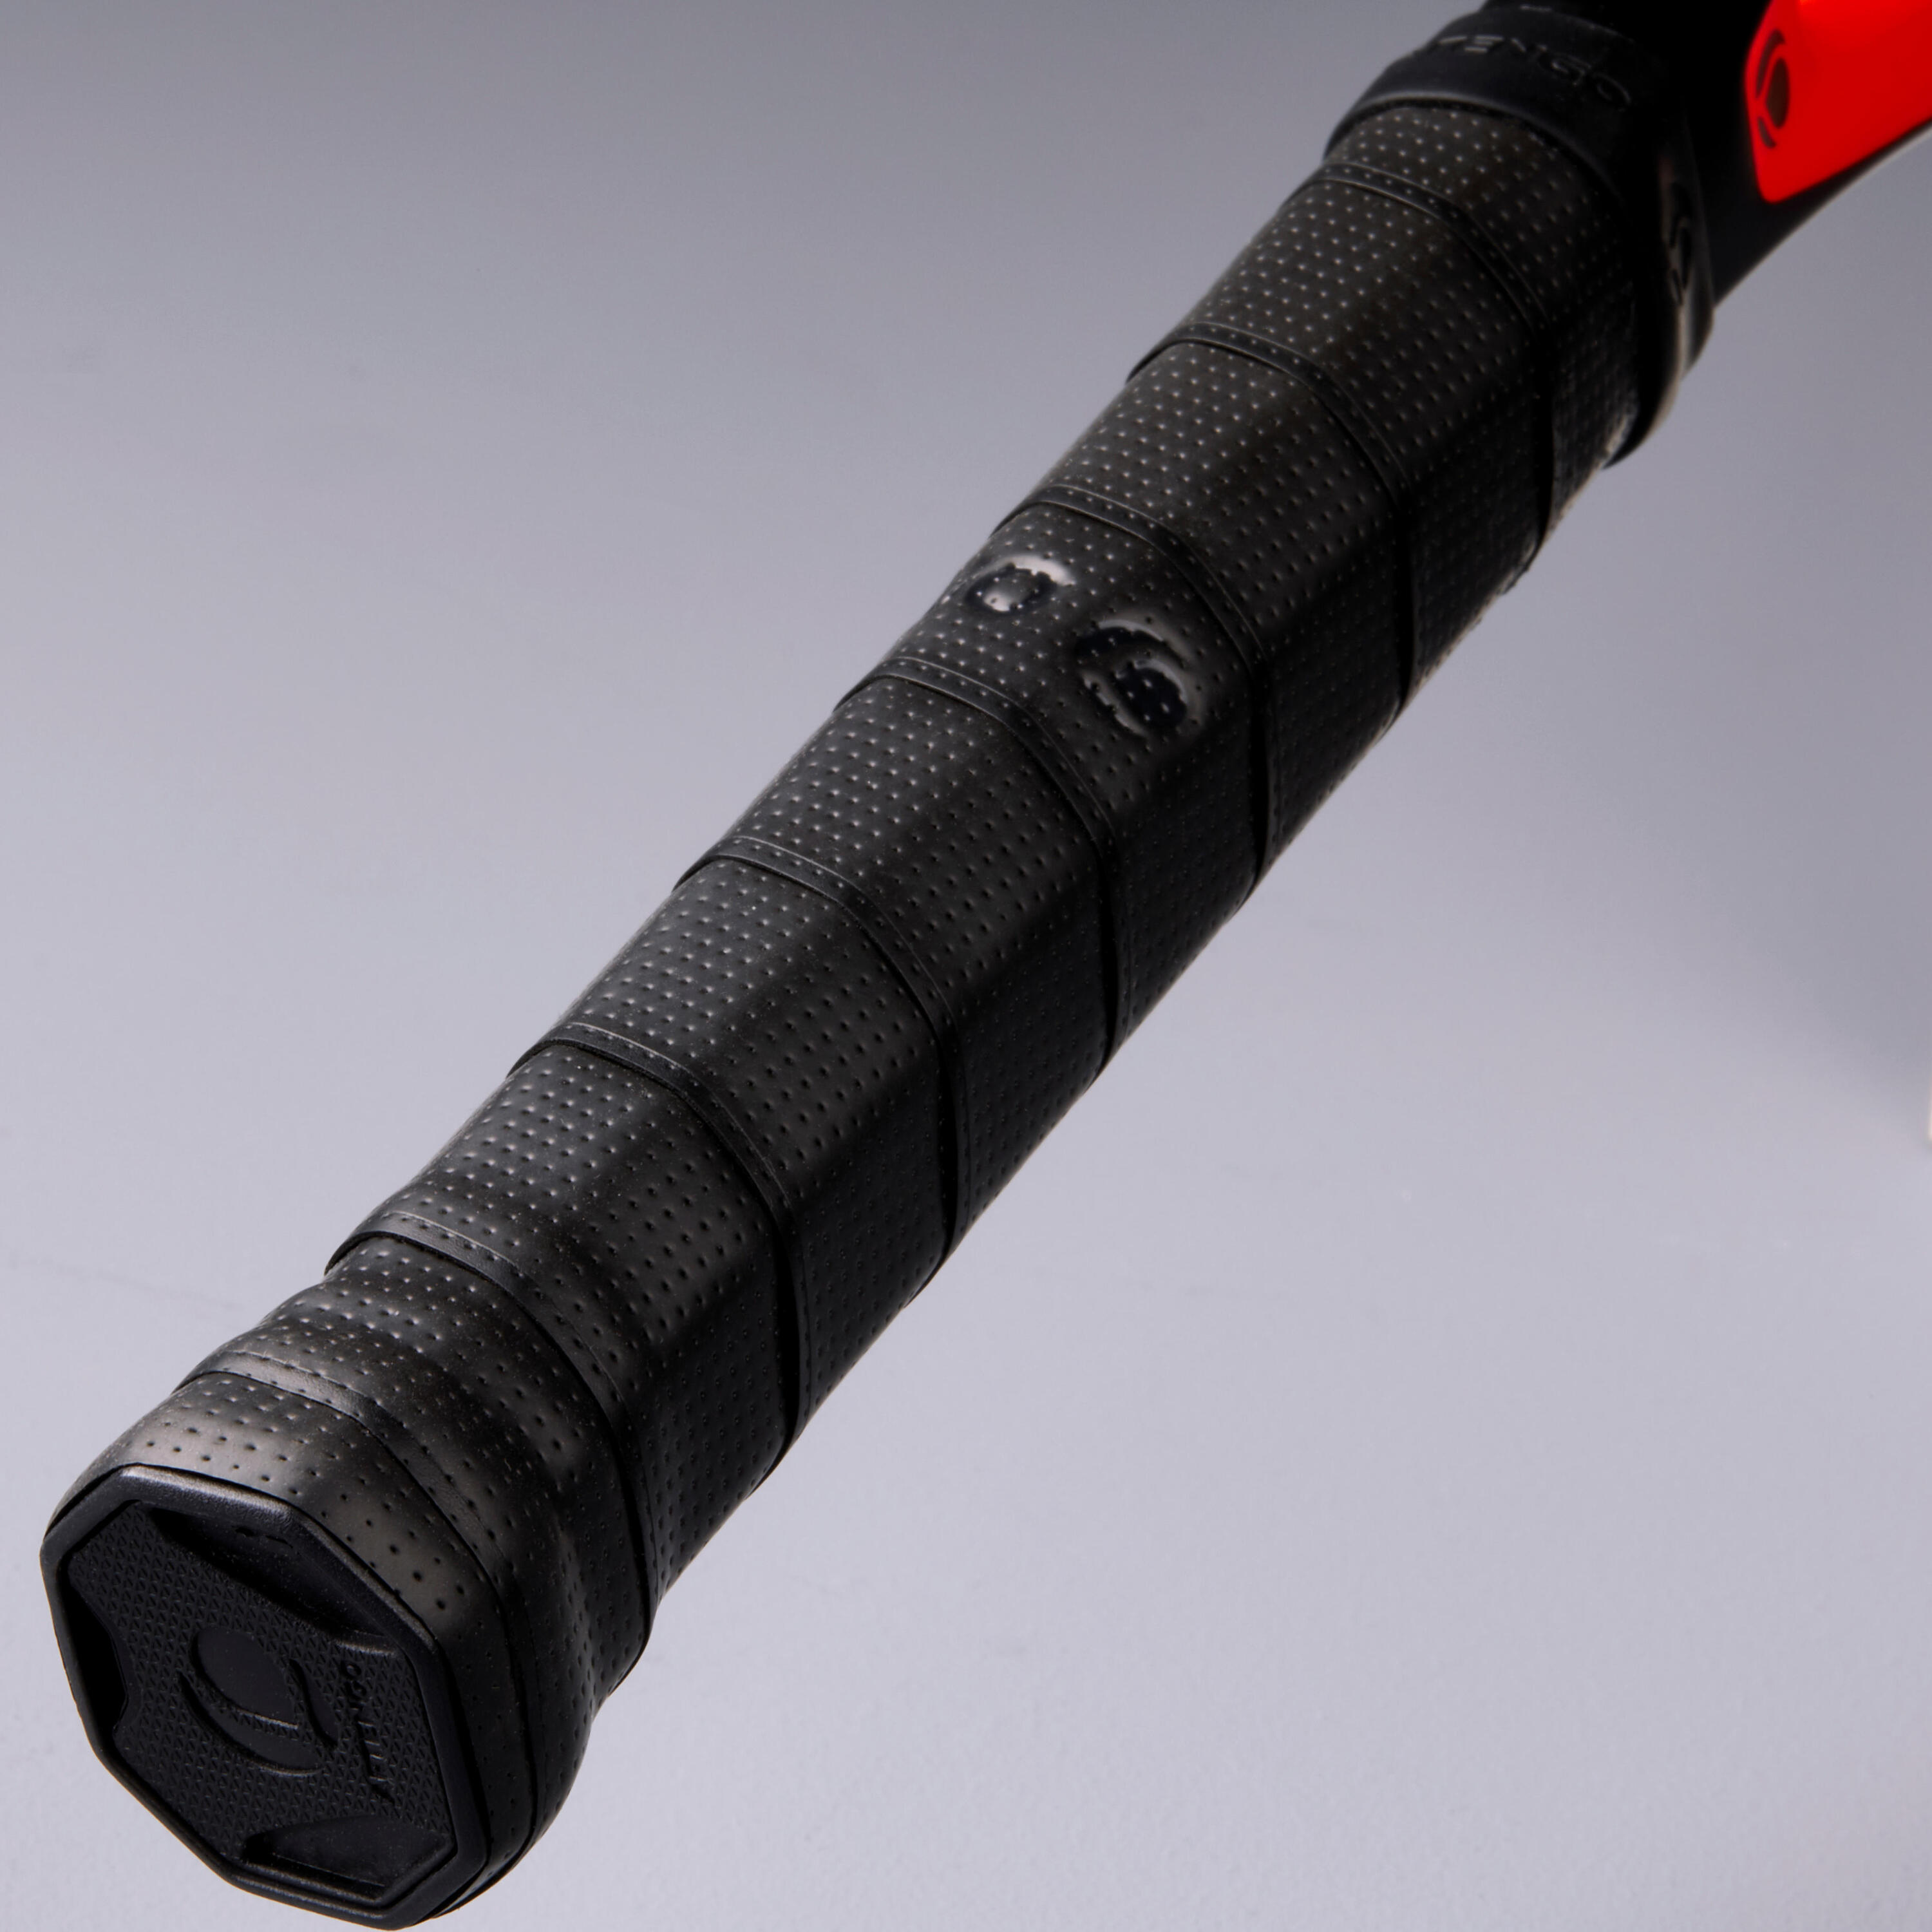 Adult Tennis Racket TR990 Pro+ - Black / Red 7/9